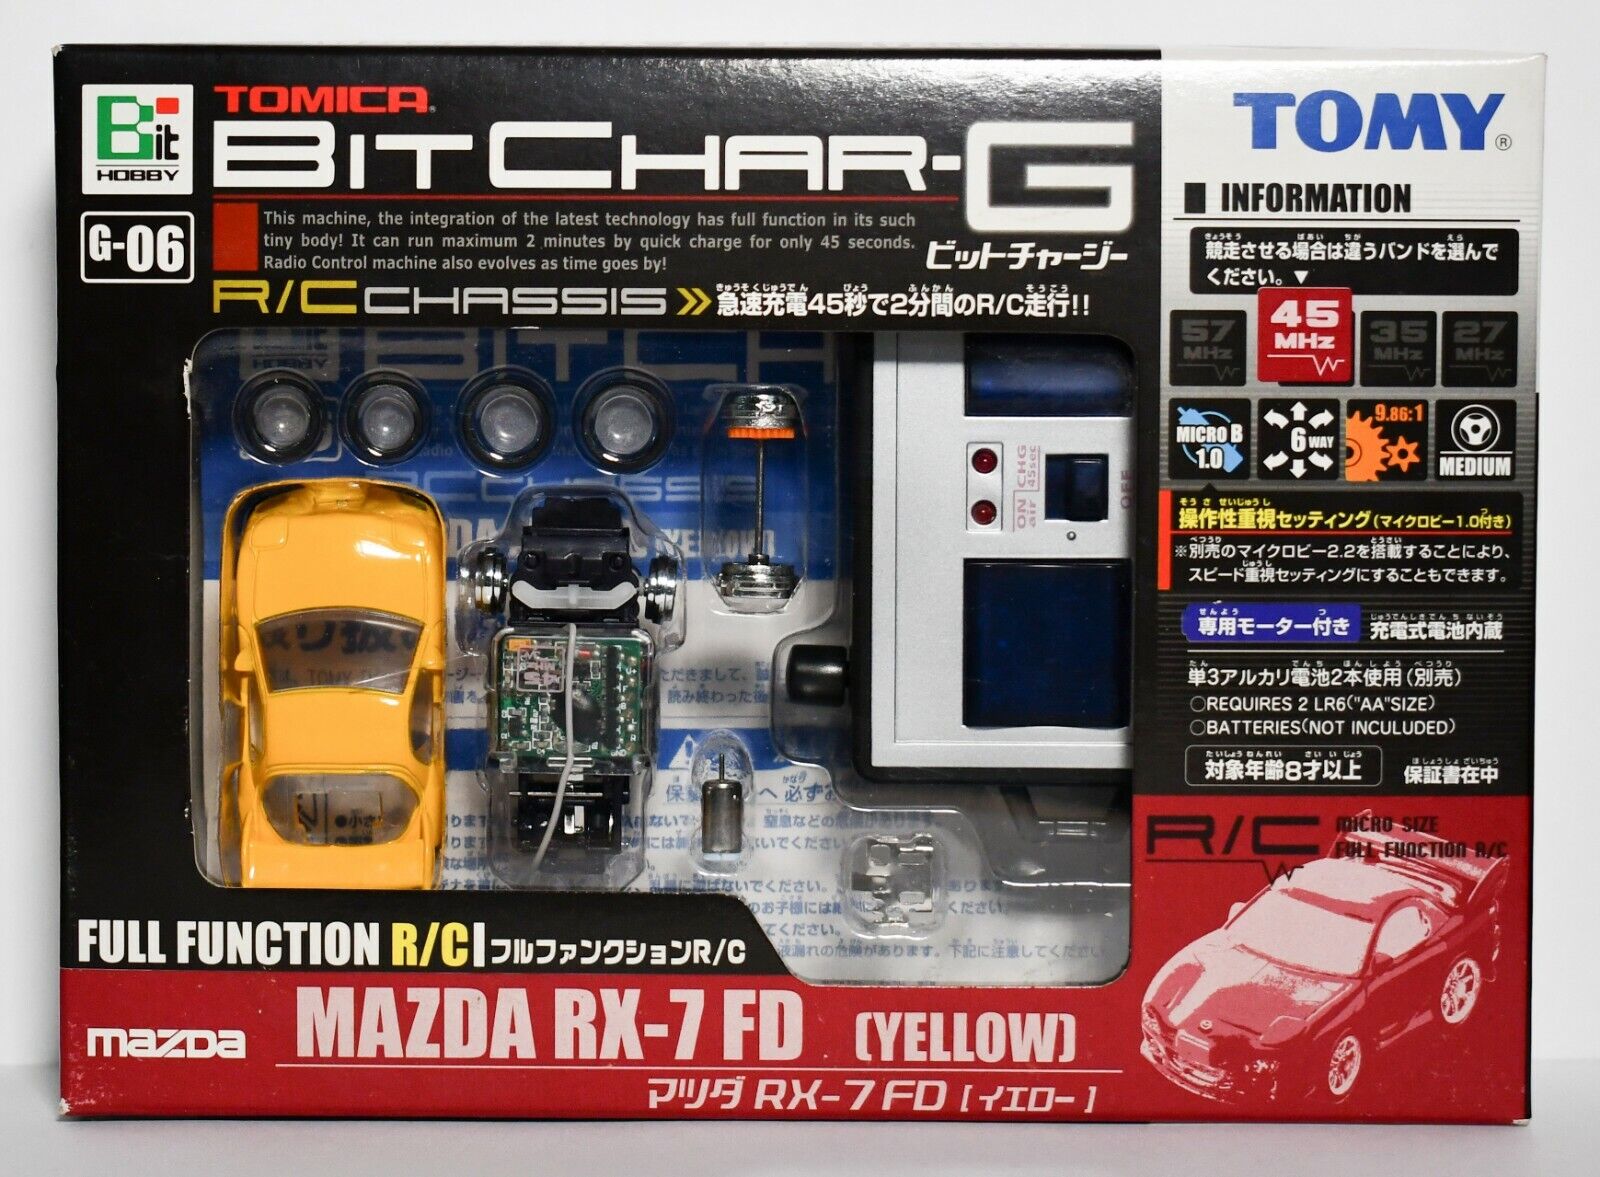 TOMY R/C Bit Char-G Tomica -MAZDA RX-7 FD- 45 Mhz